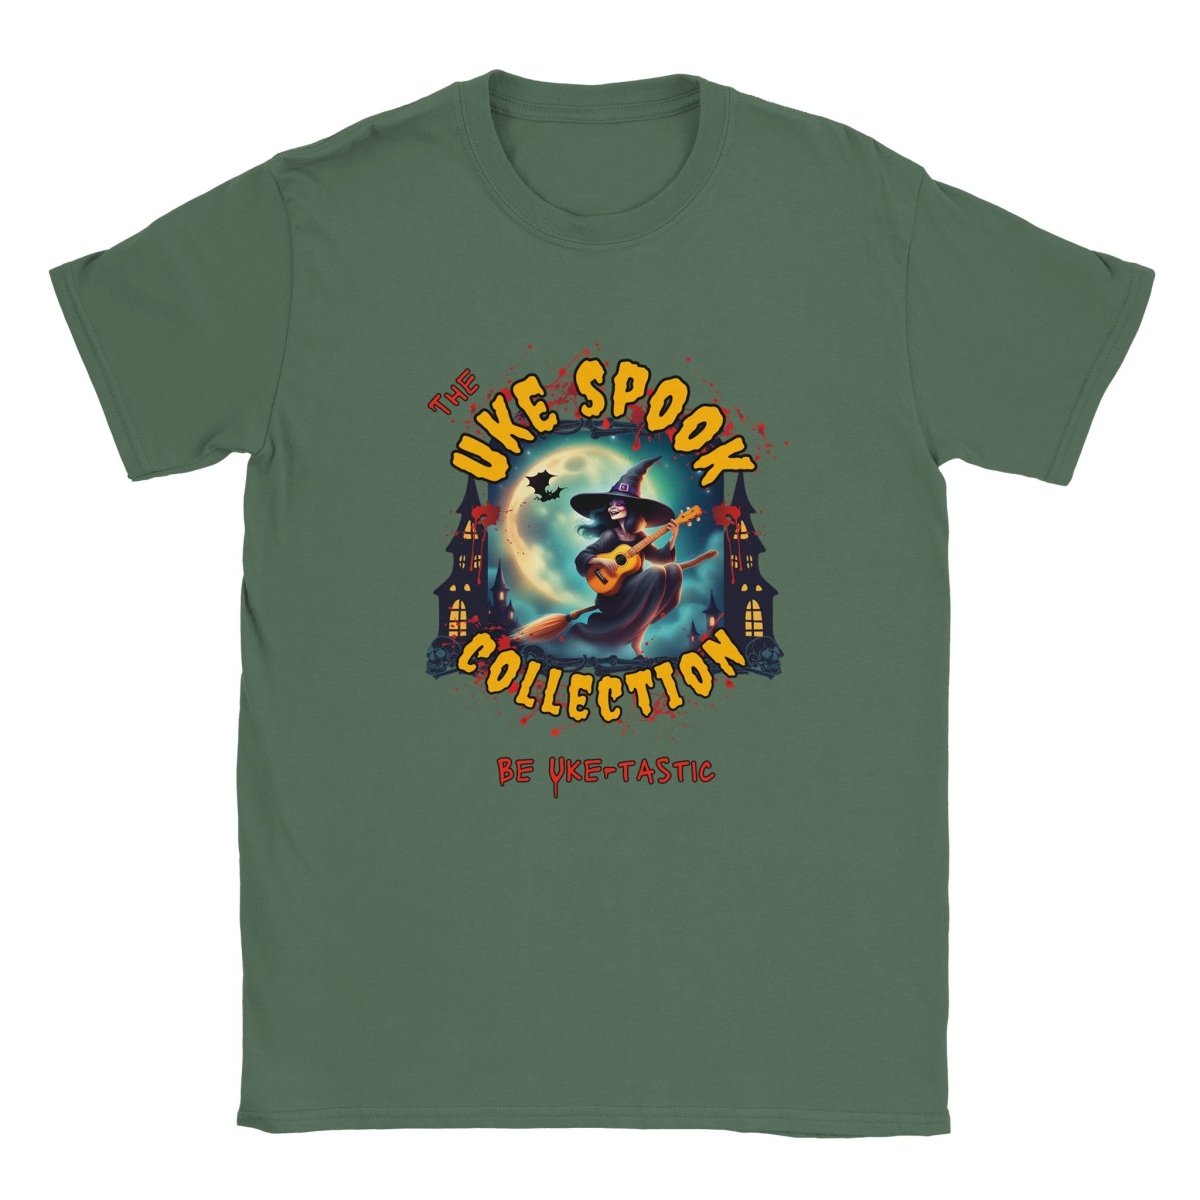 Uke Spook Witch - Classic Unisex Crewneck T-shirt - Uke Tastic - Military Green - The Uke Spook Collection - Uke Tastic